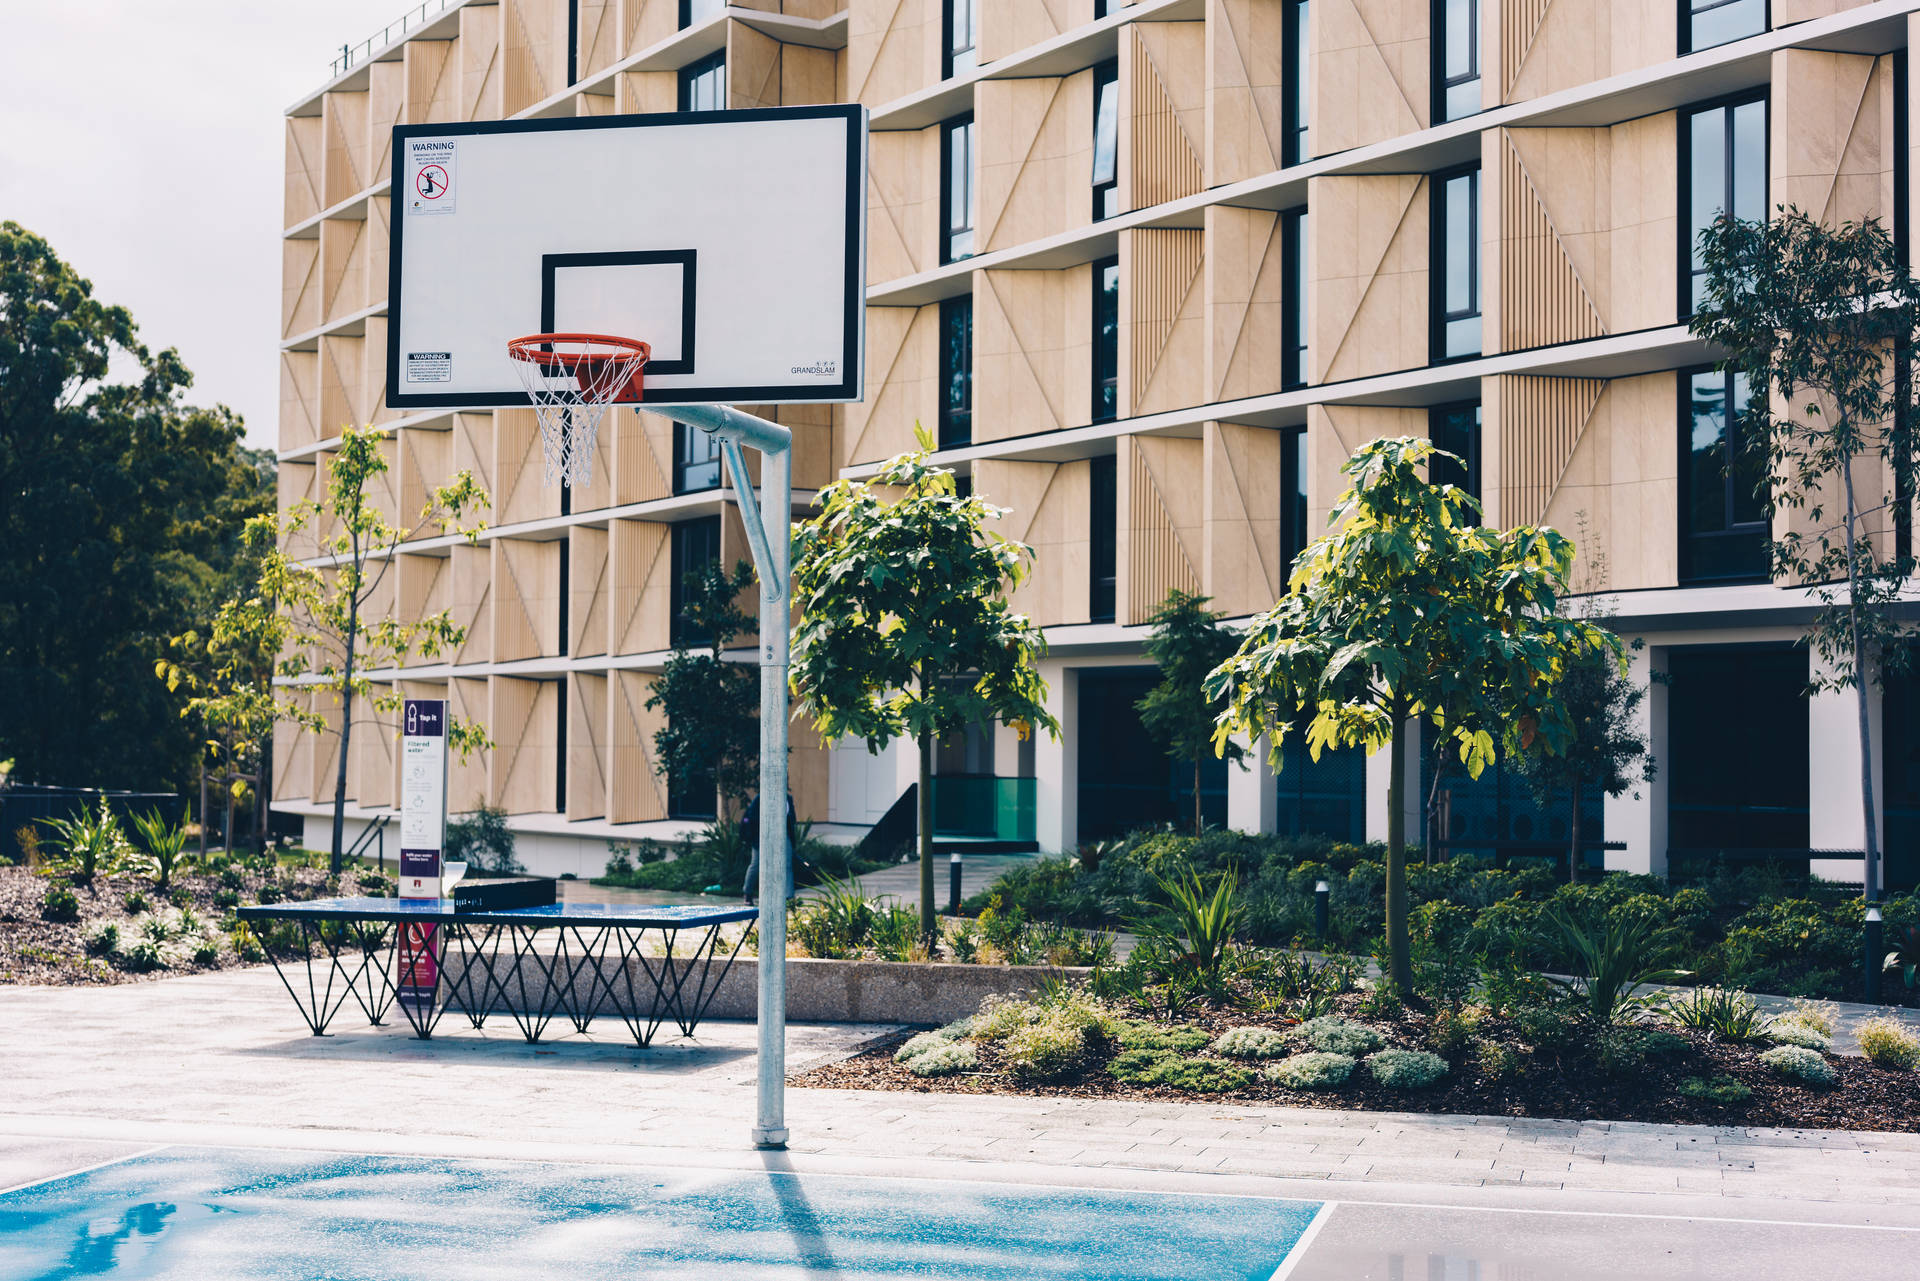 University Basketball Court Background